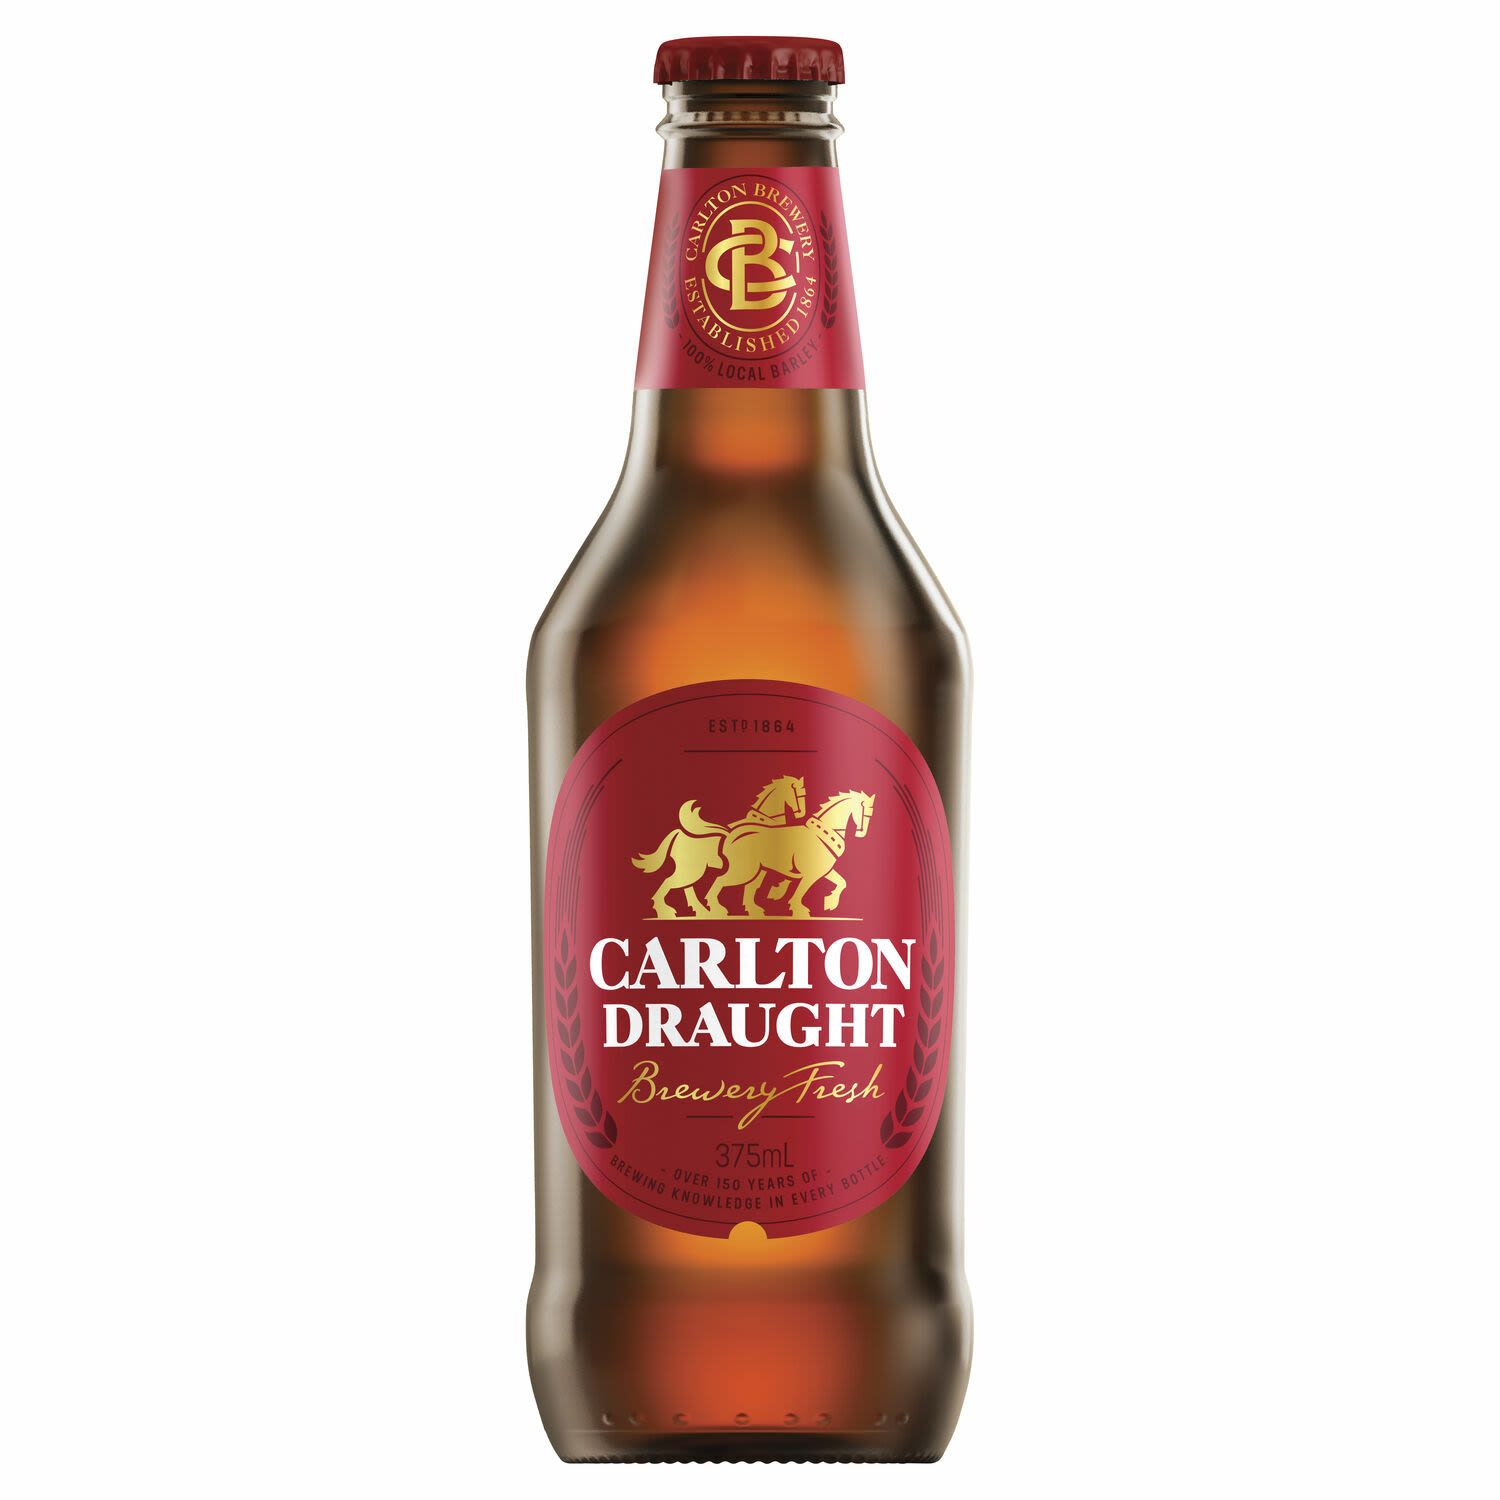 Carlton Draught Bottle 375mL